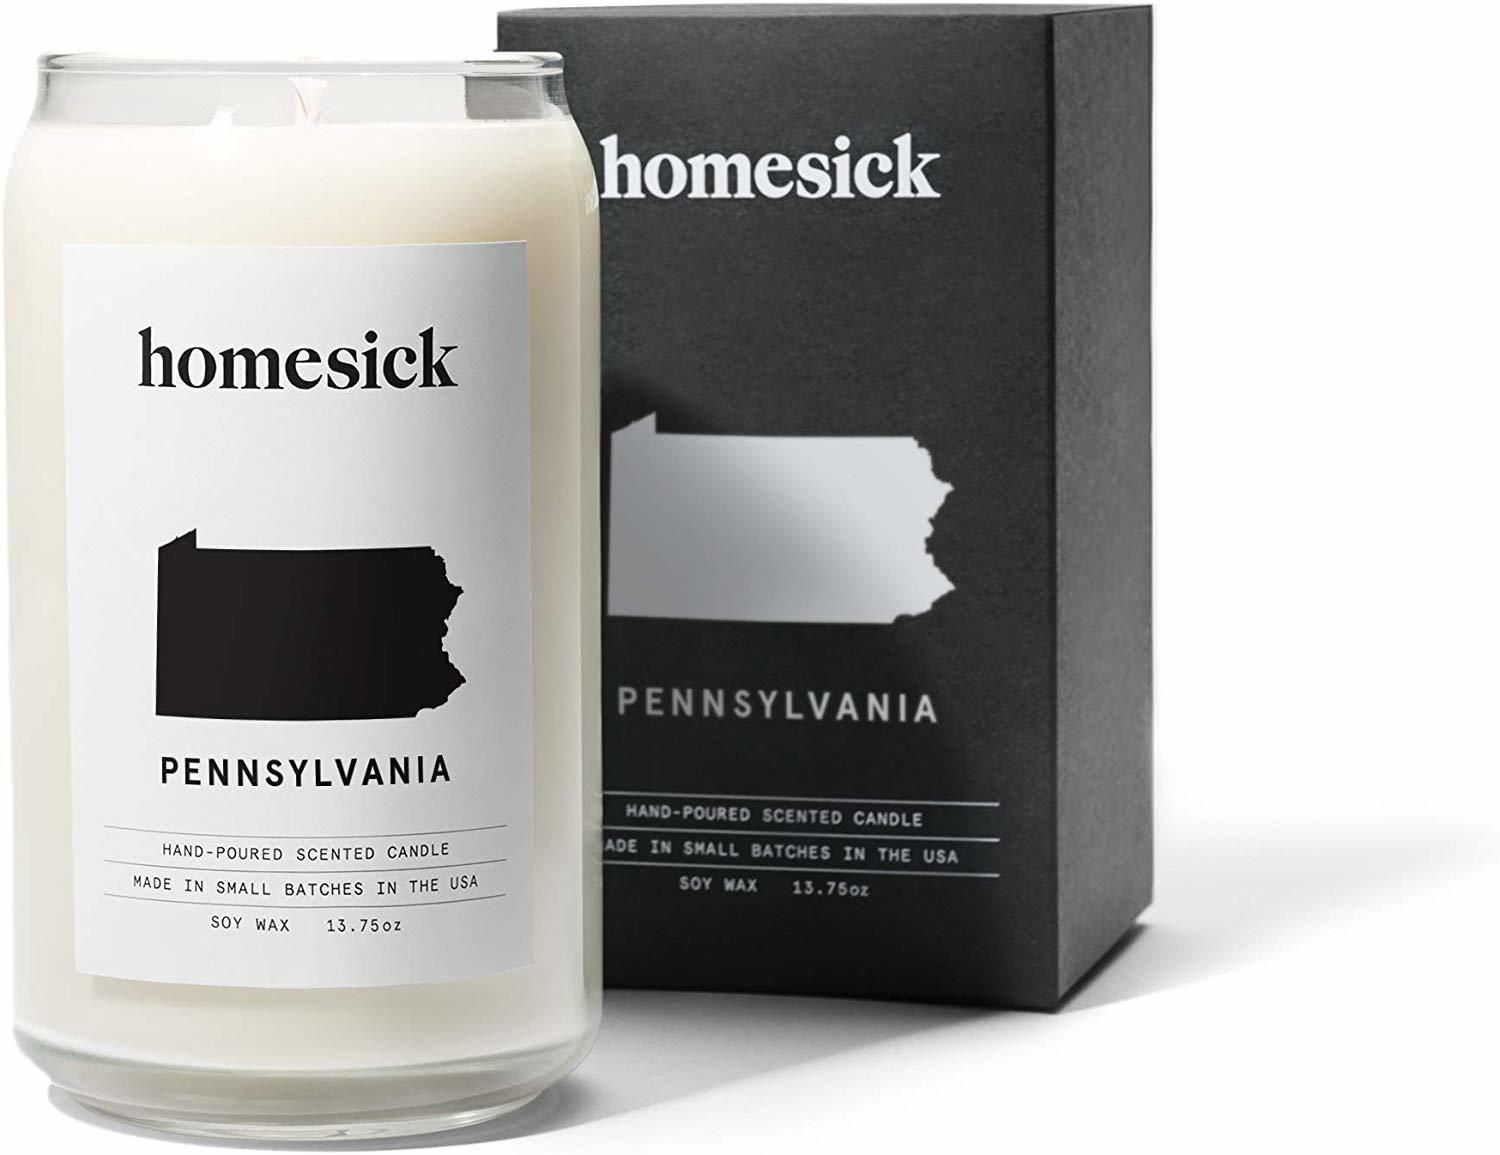 Homesick brand candles